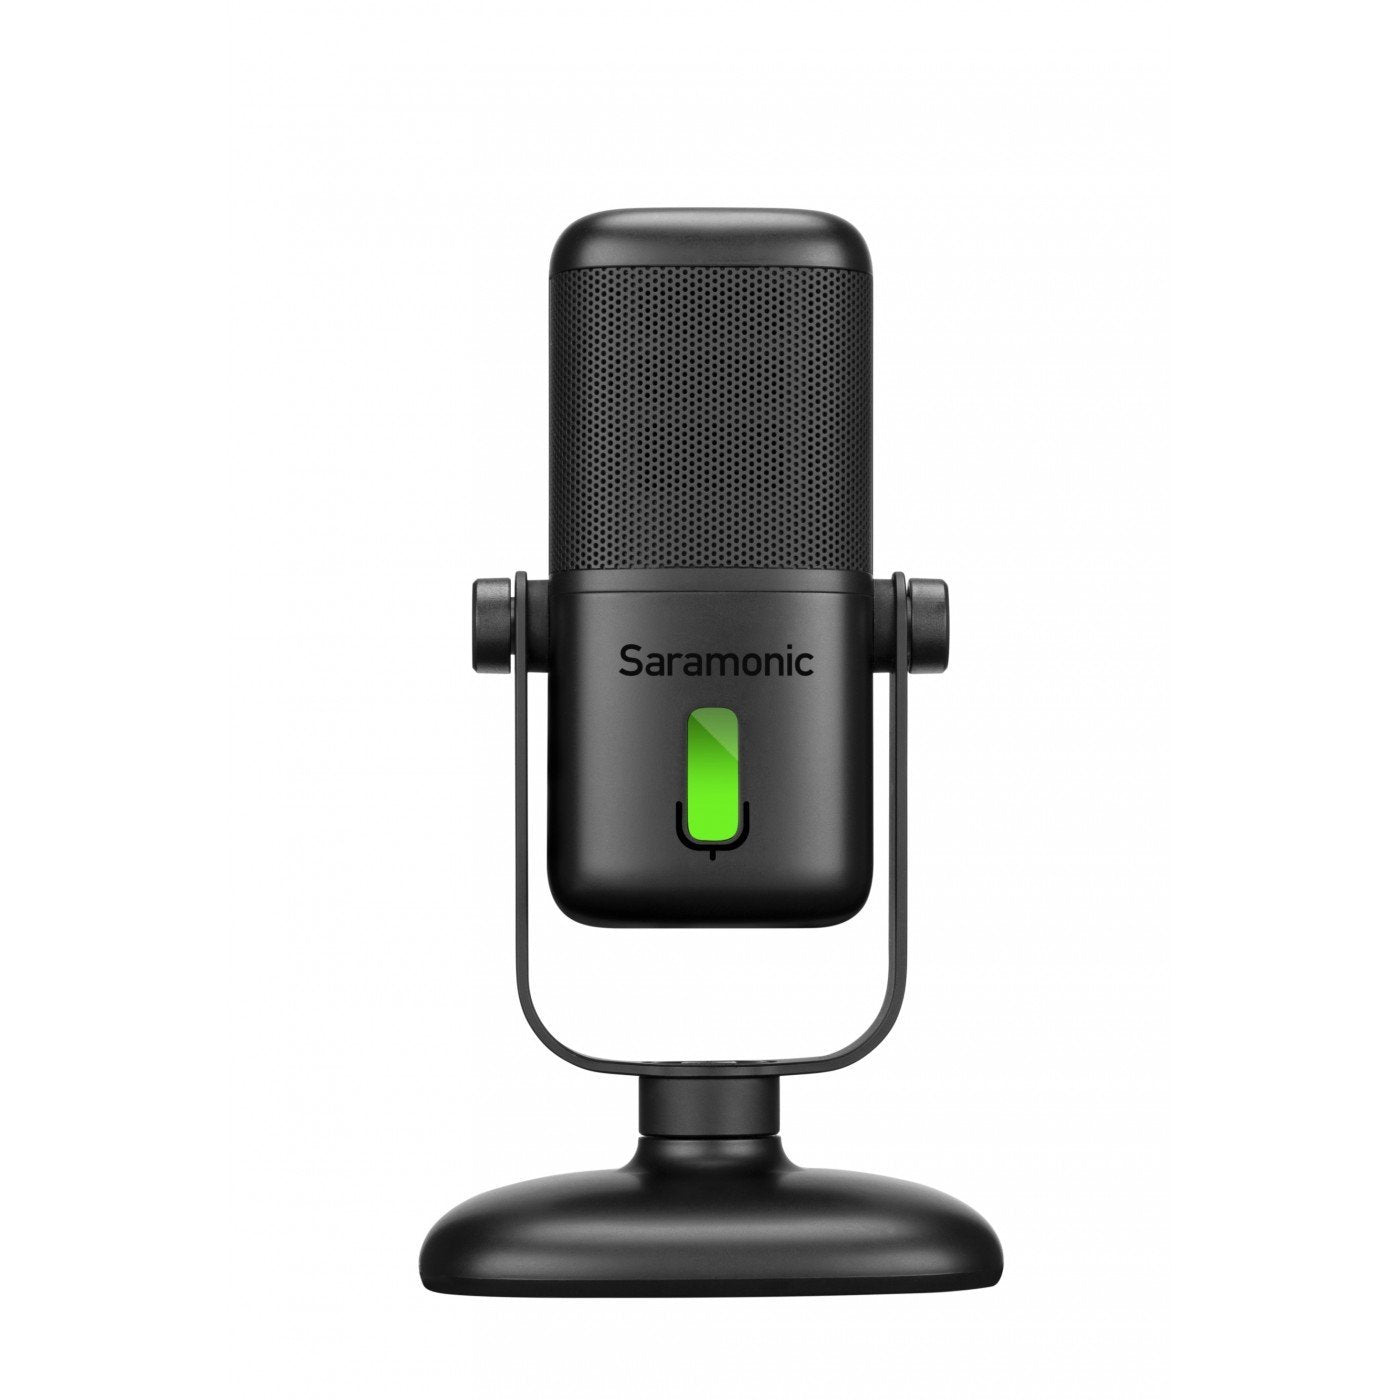 Saramonic SR-MV2000 USB mic for podcasting